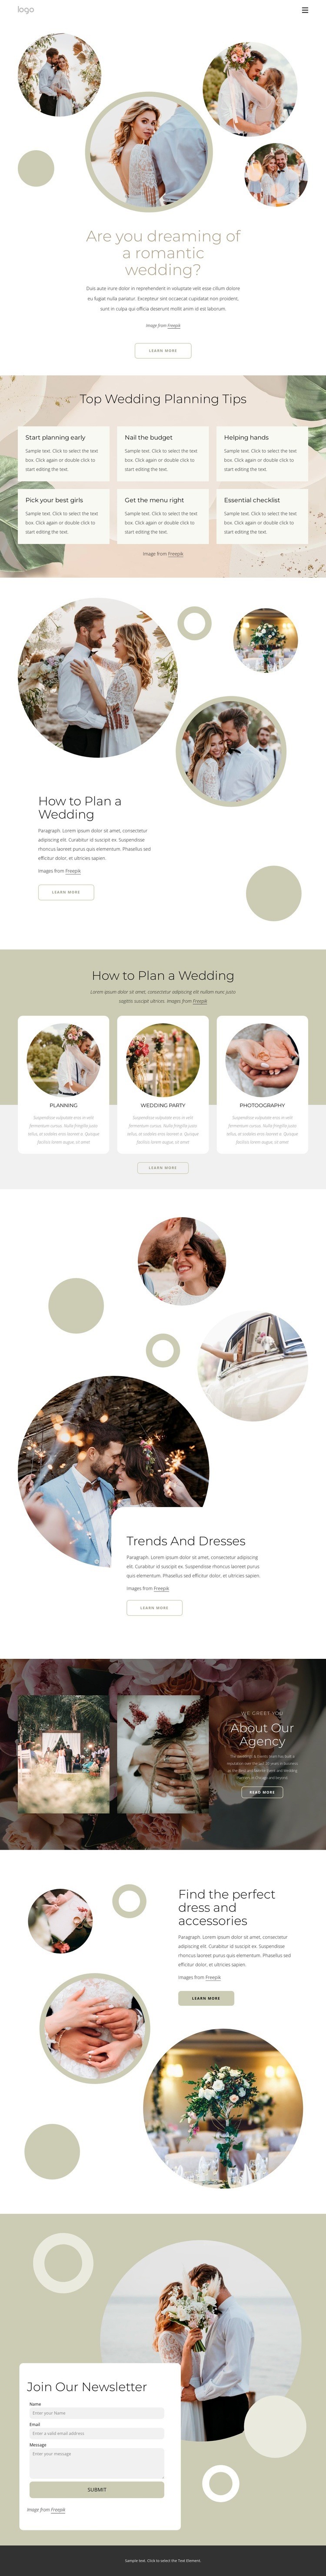 Romantic wedding Web Page Design